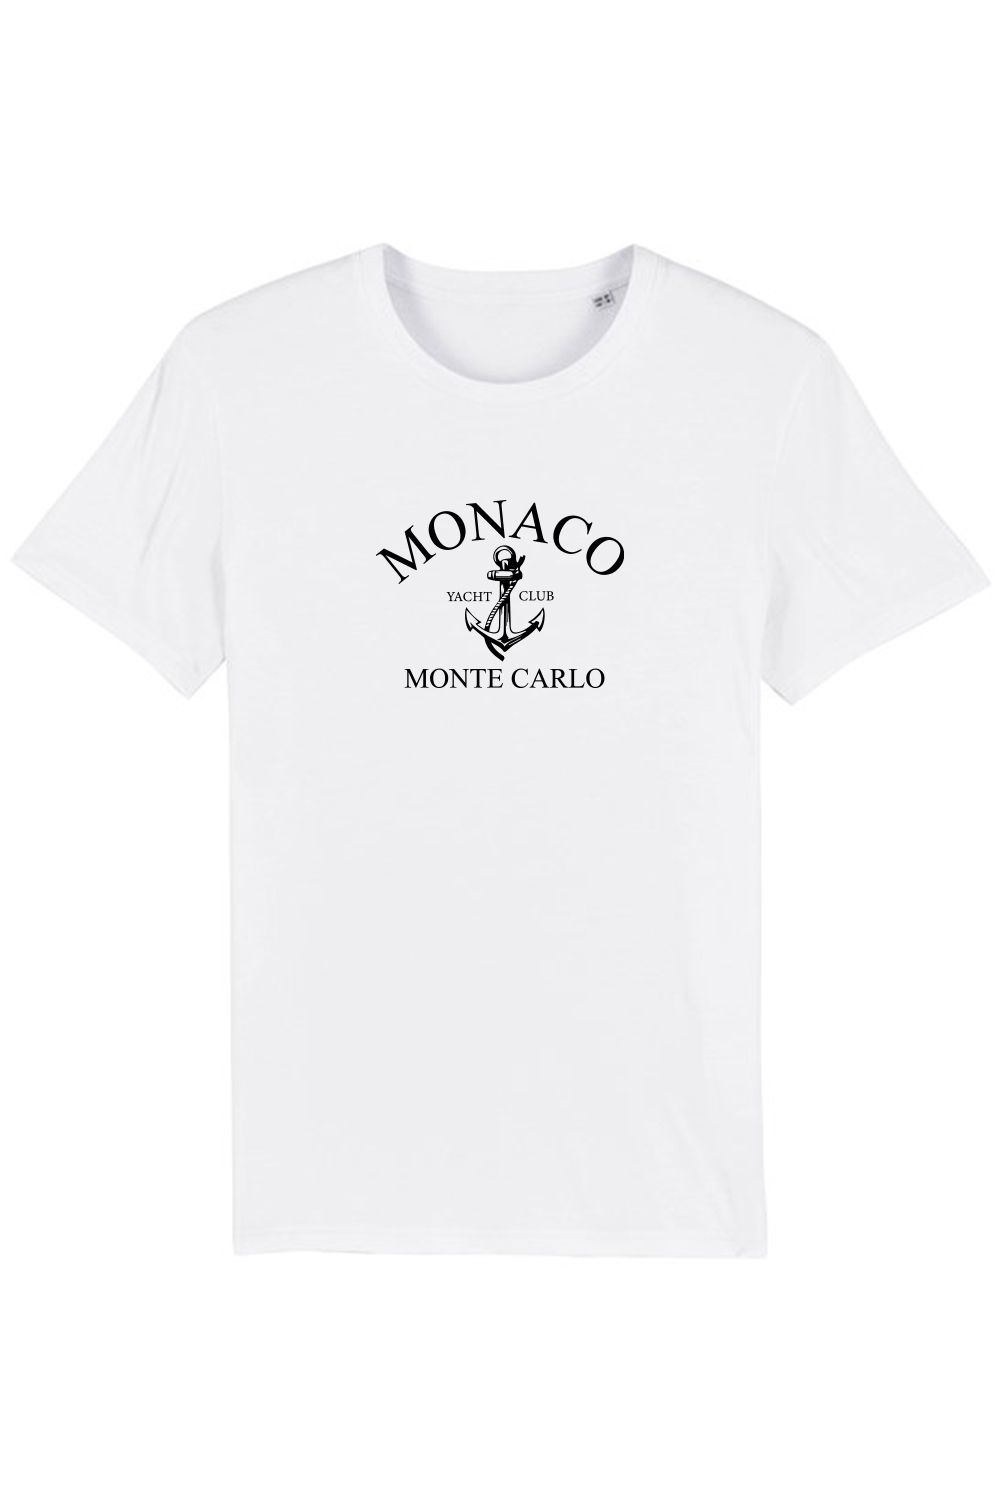 Monaco Print Oversized T-Shirt (Pack of 6)